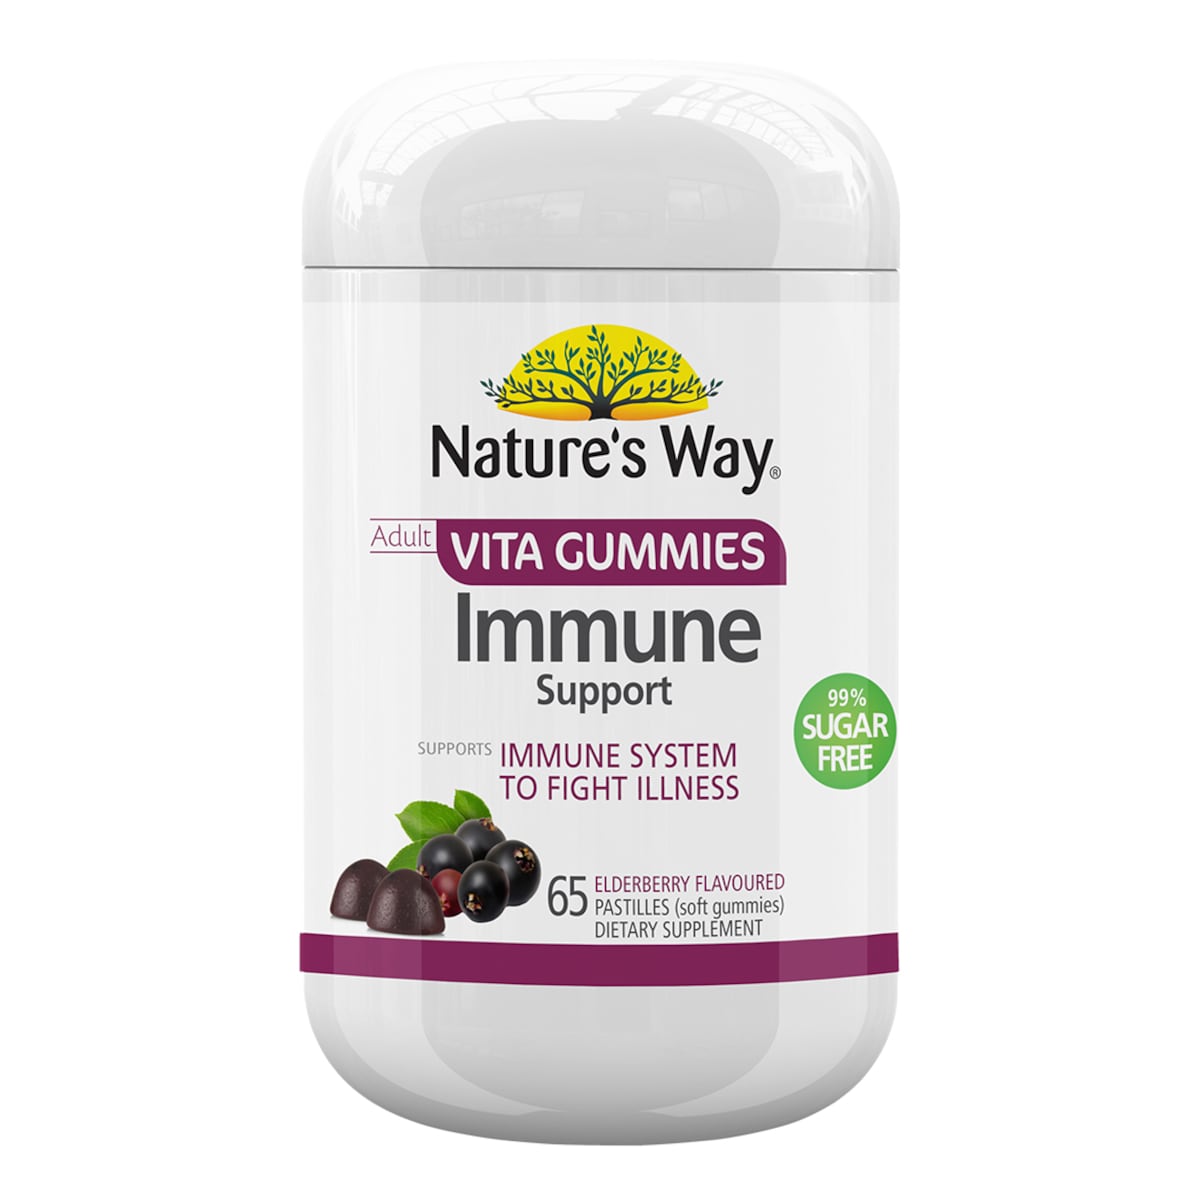 Natures Way Adult Vita Gummies Immune Support 65 Pack